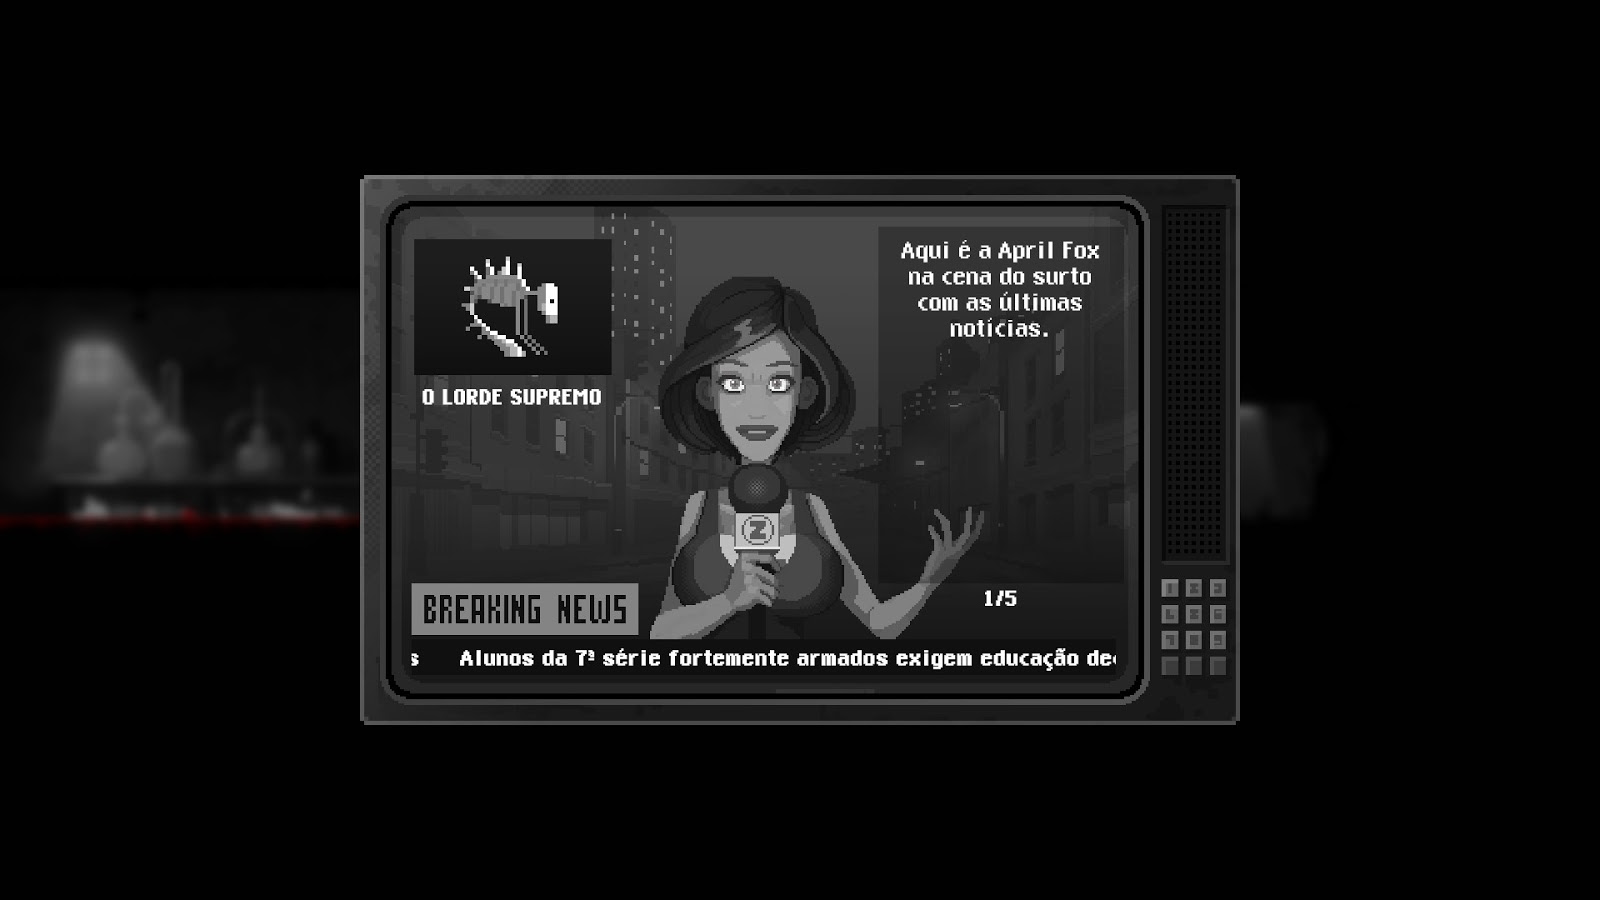 Zombie Night Terror (PC) mostra o outro lado de uma epidemia zumbi -  GameBlast